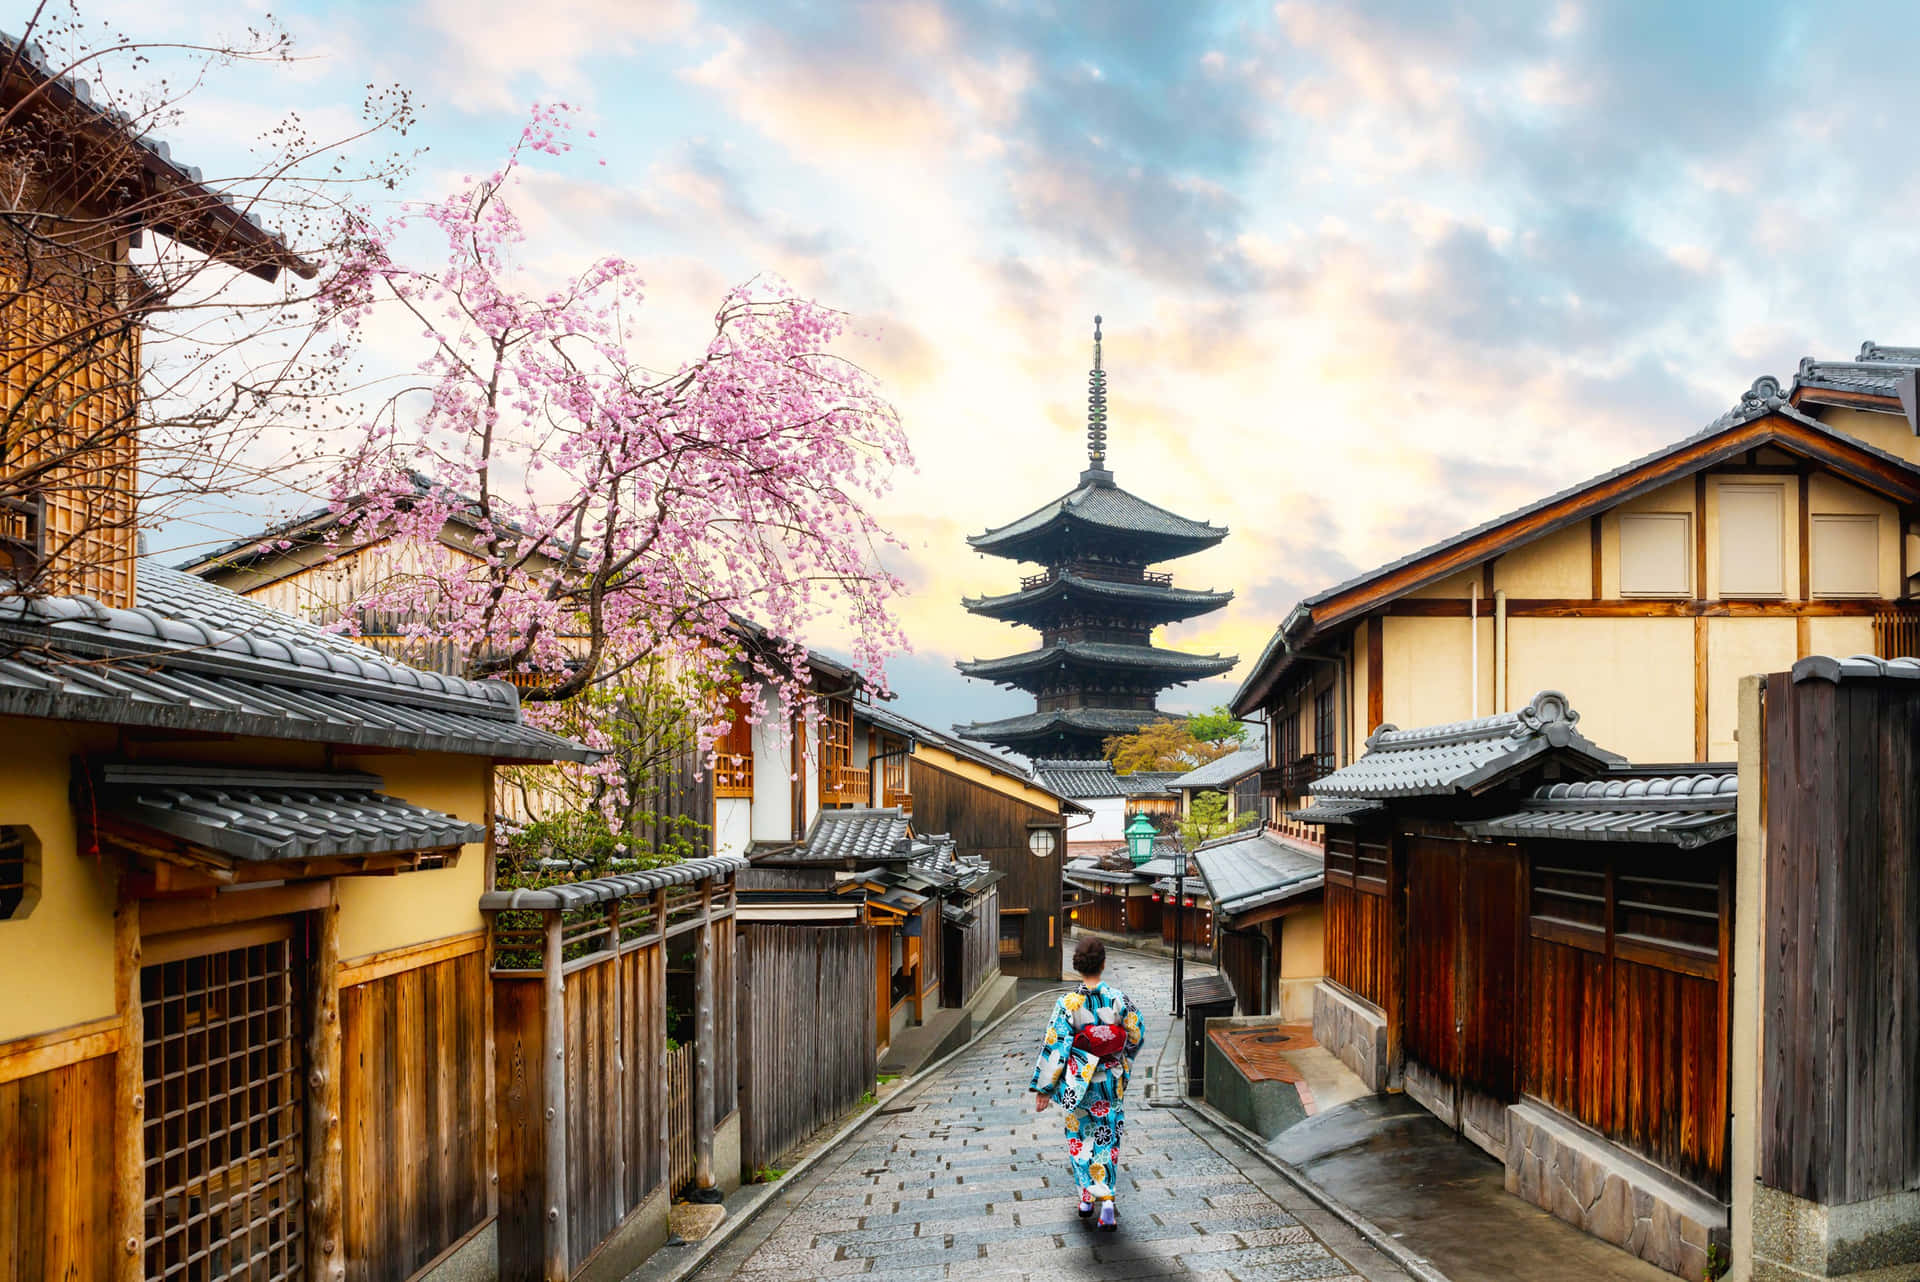 Caption: Serene Japanese Garden with Sakura Tree and Wooden Bridge